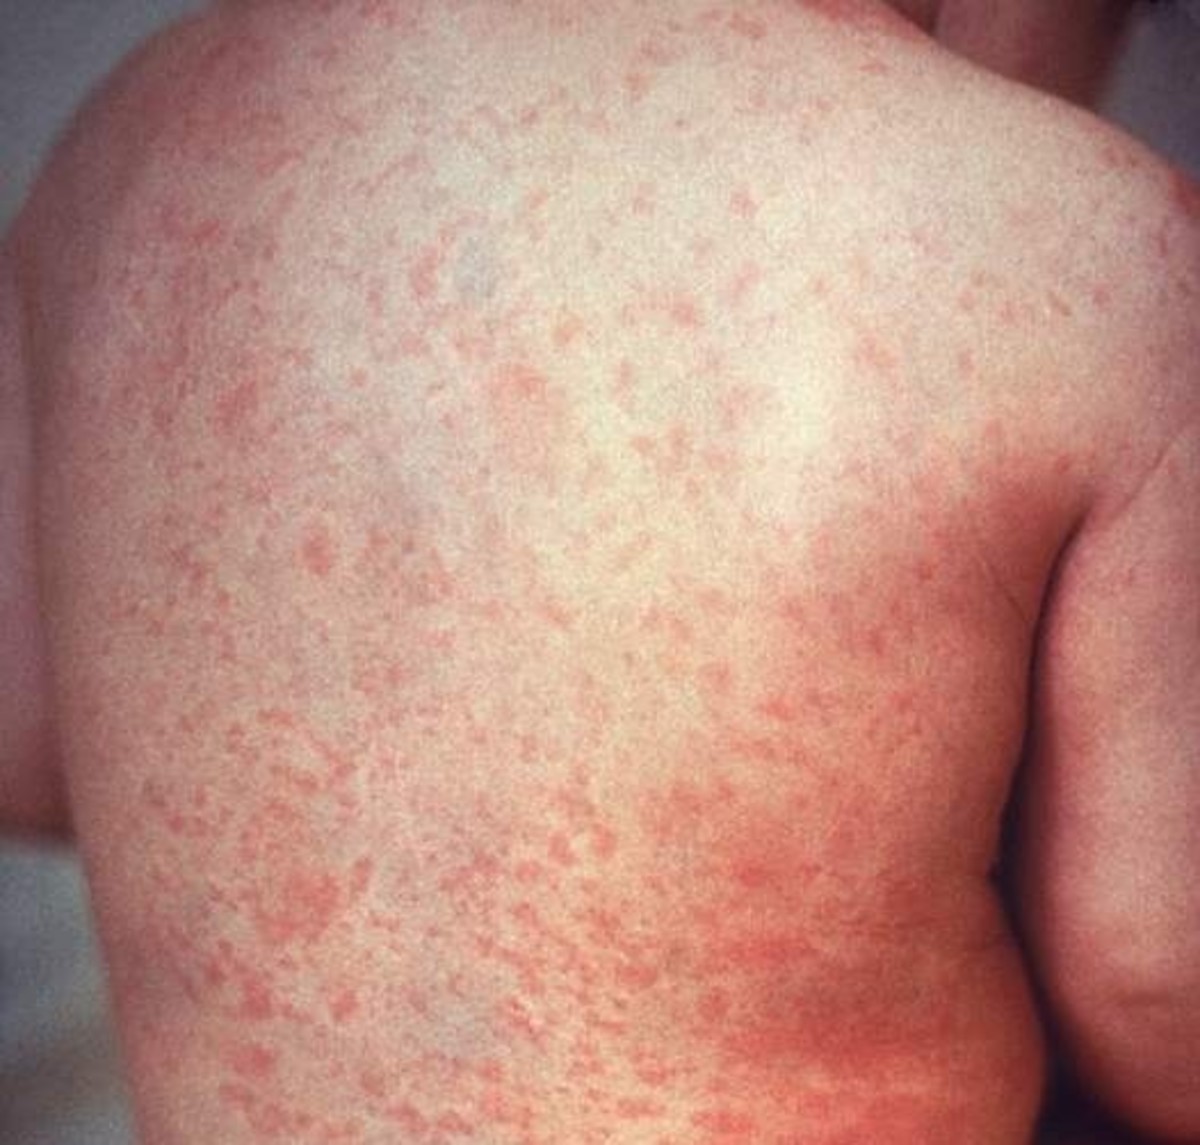 A rubella rash